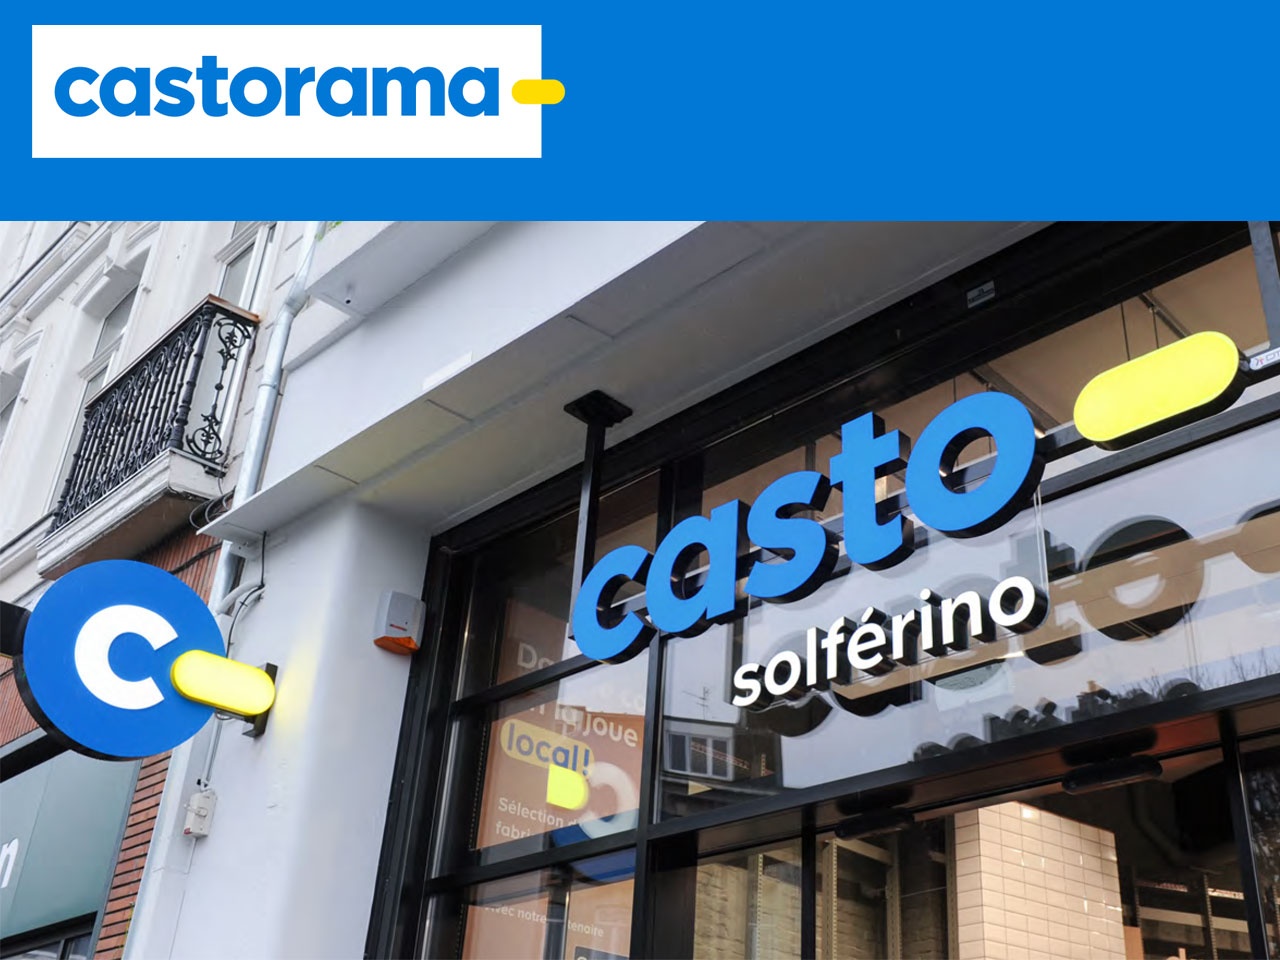 Castorama, avec Casto Solferino à Lille, propose un nouveau concept 100% urbain !